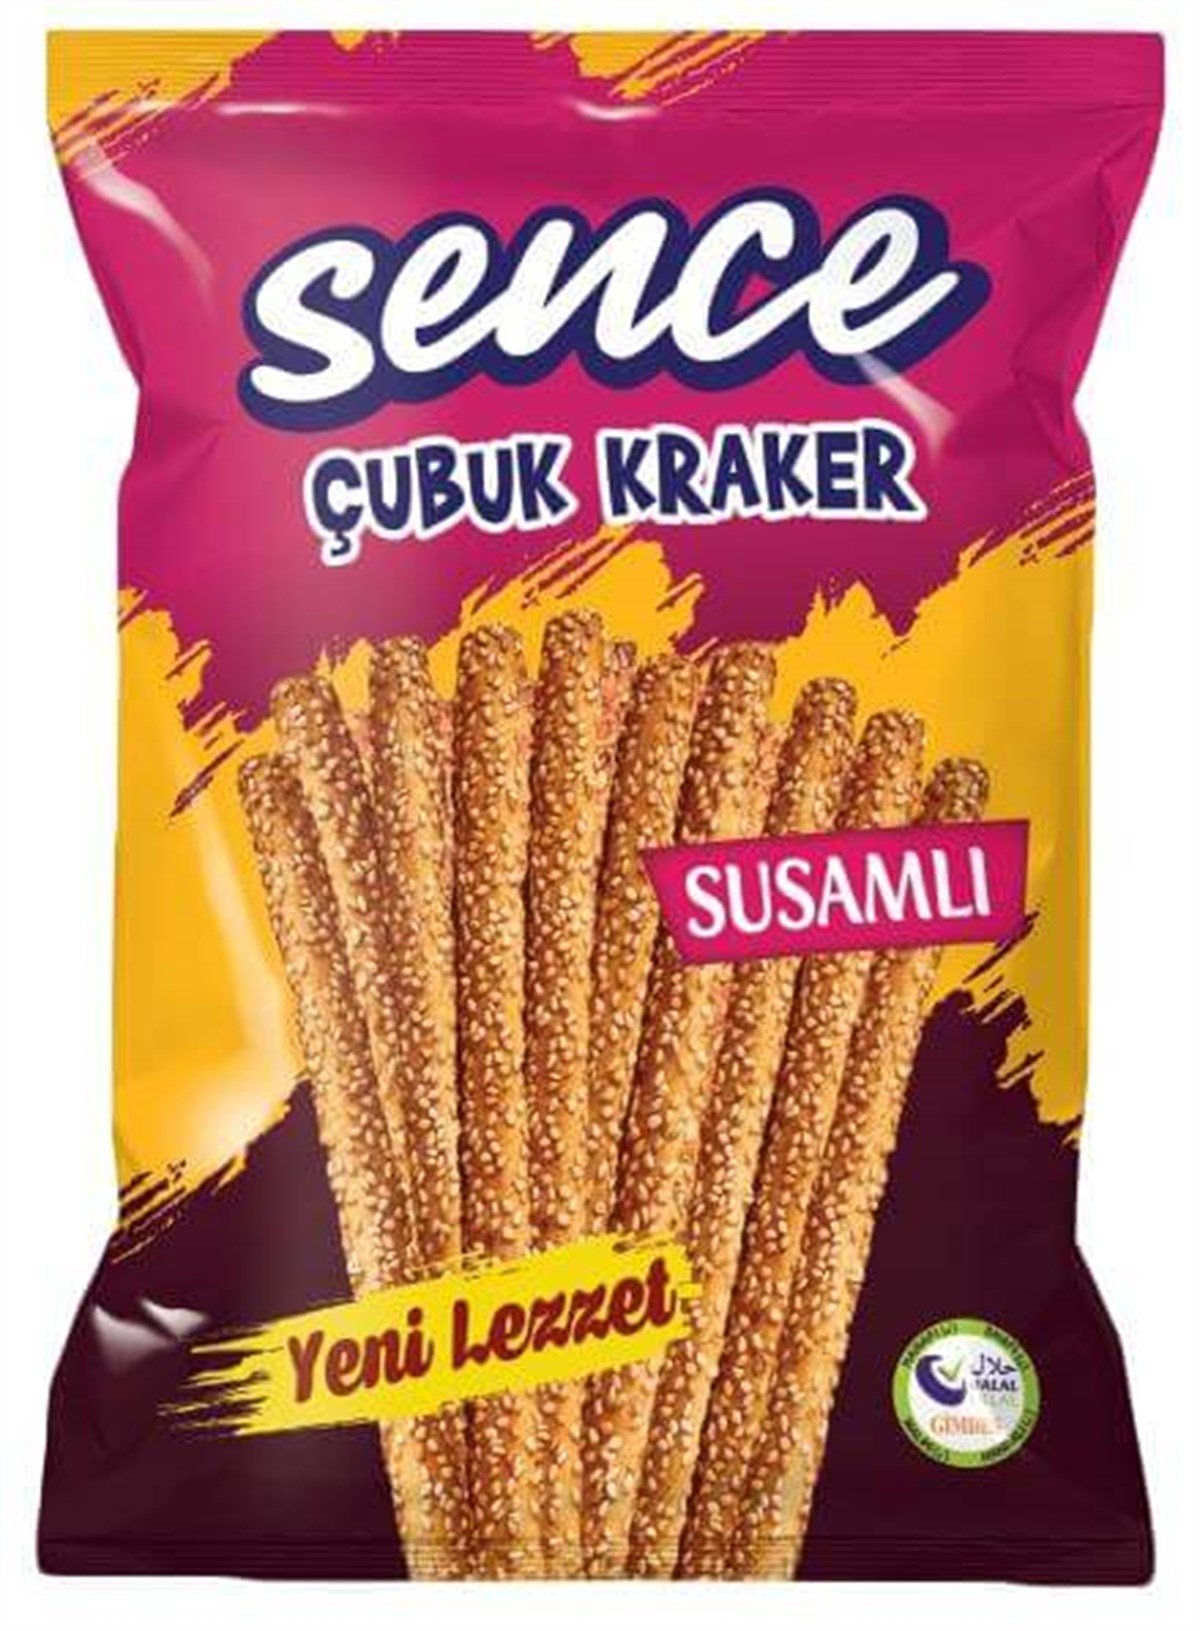 Sence Susamlı Çubuk Kraker 40 gr helalsitesi.com